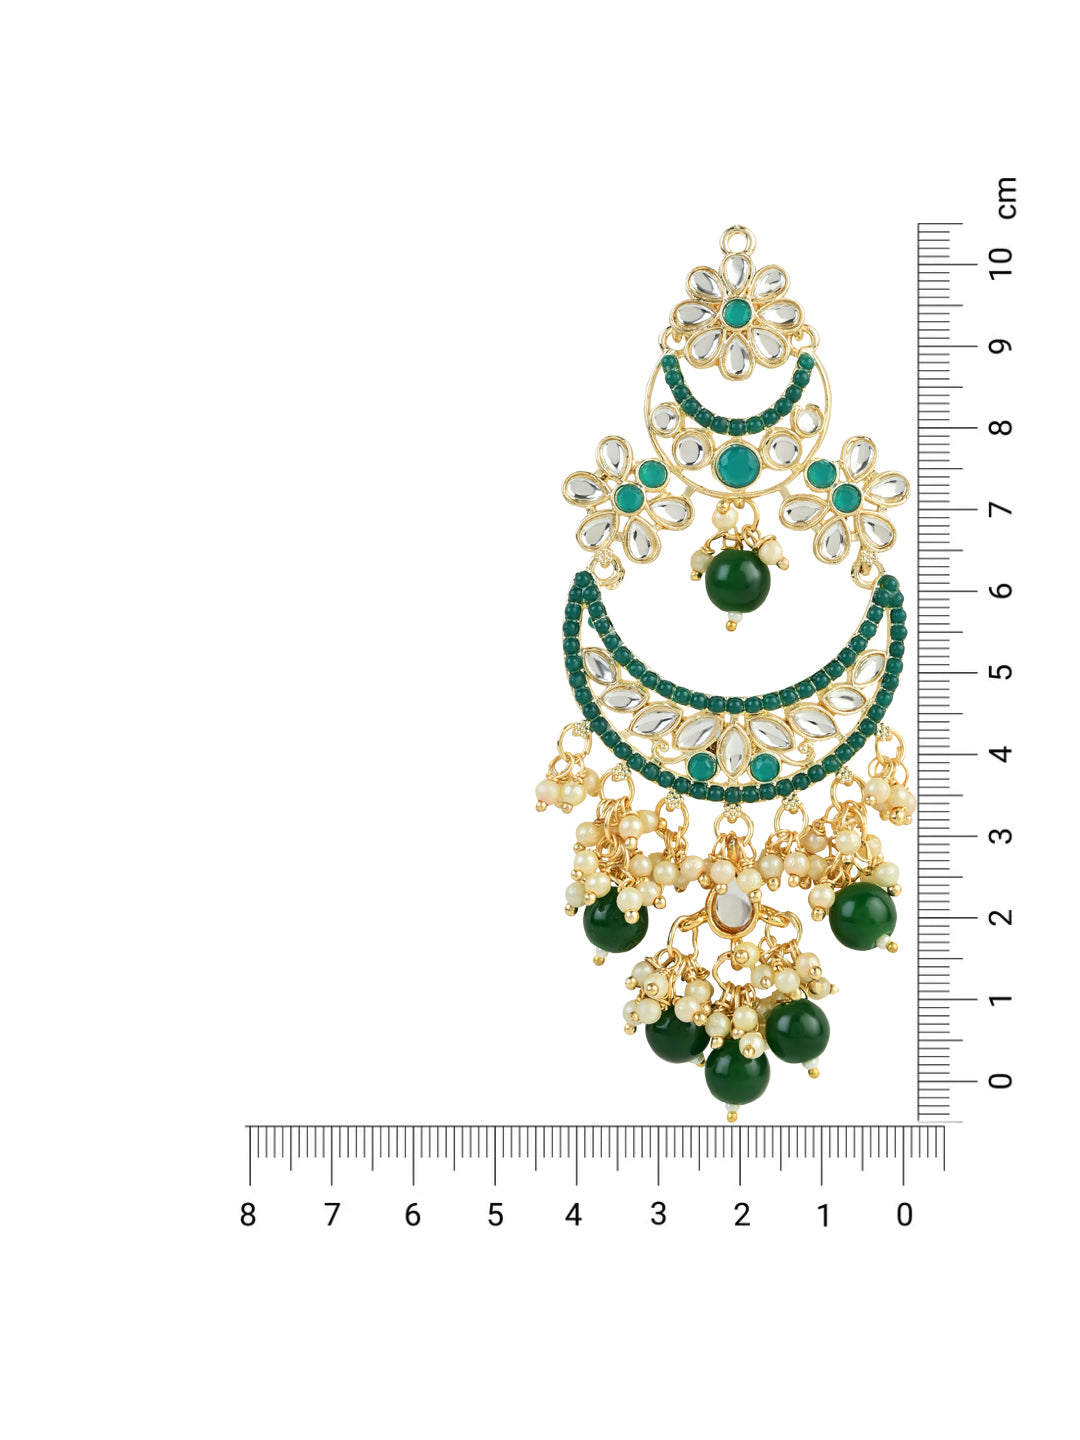 Women's 18K Gold Plated Traditional Handcrafted Pearl Kundan Beaded Chandbali Earrings (E3054G) - I Jewels